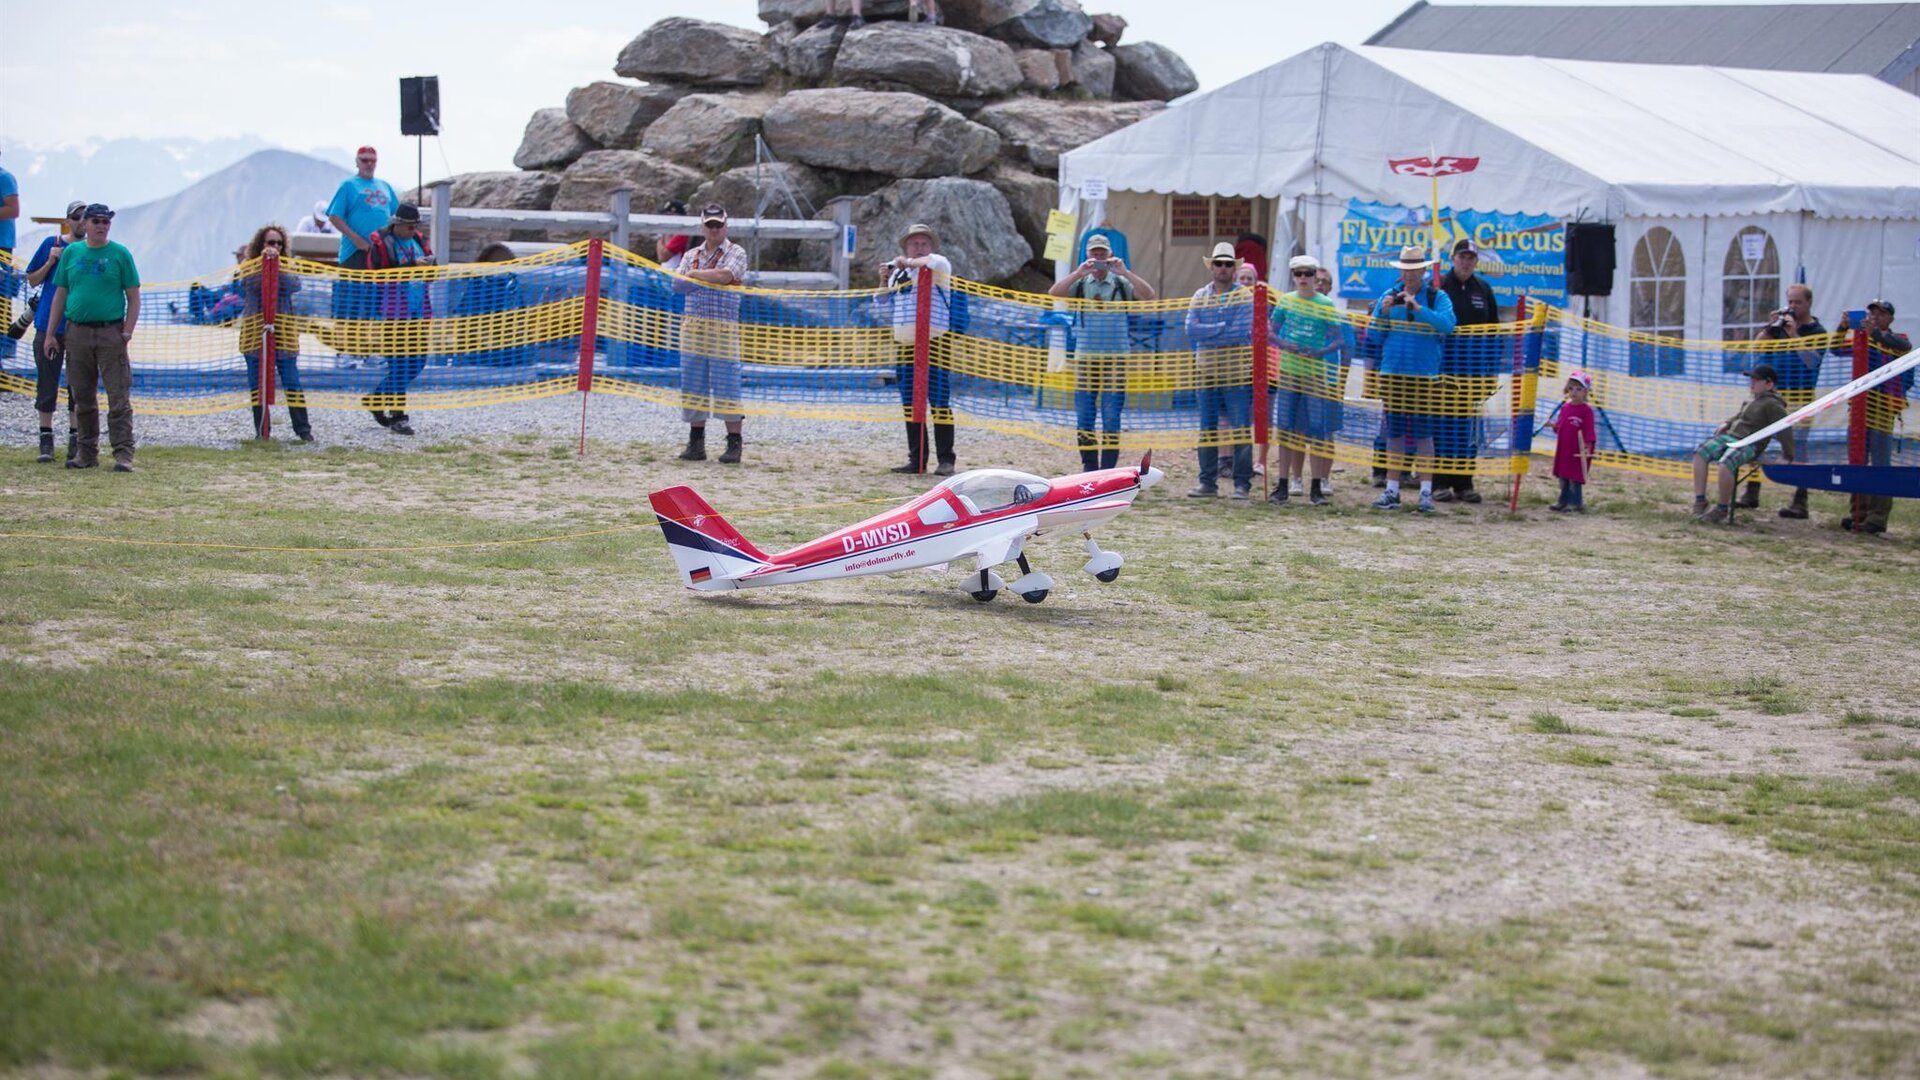 Landeplatz Flying Circus (c) Andreas Kirschner